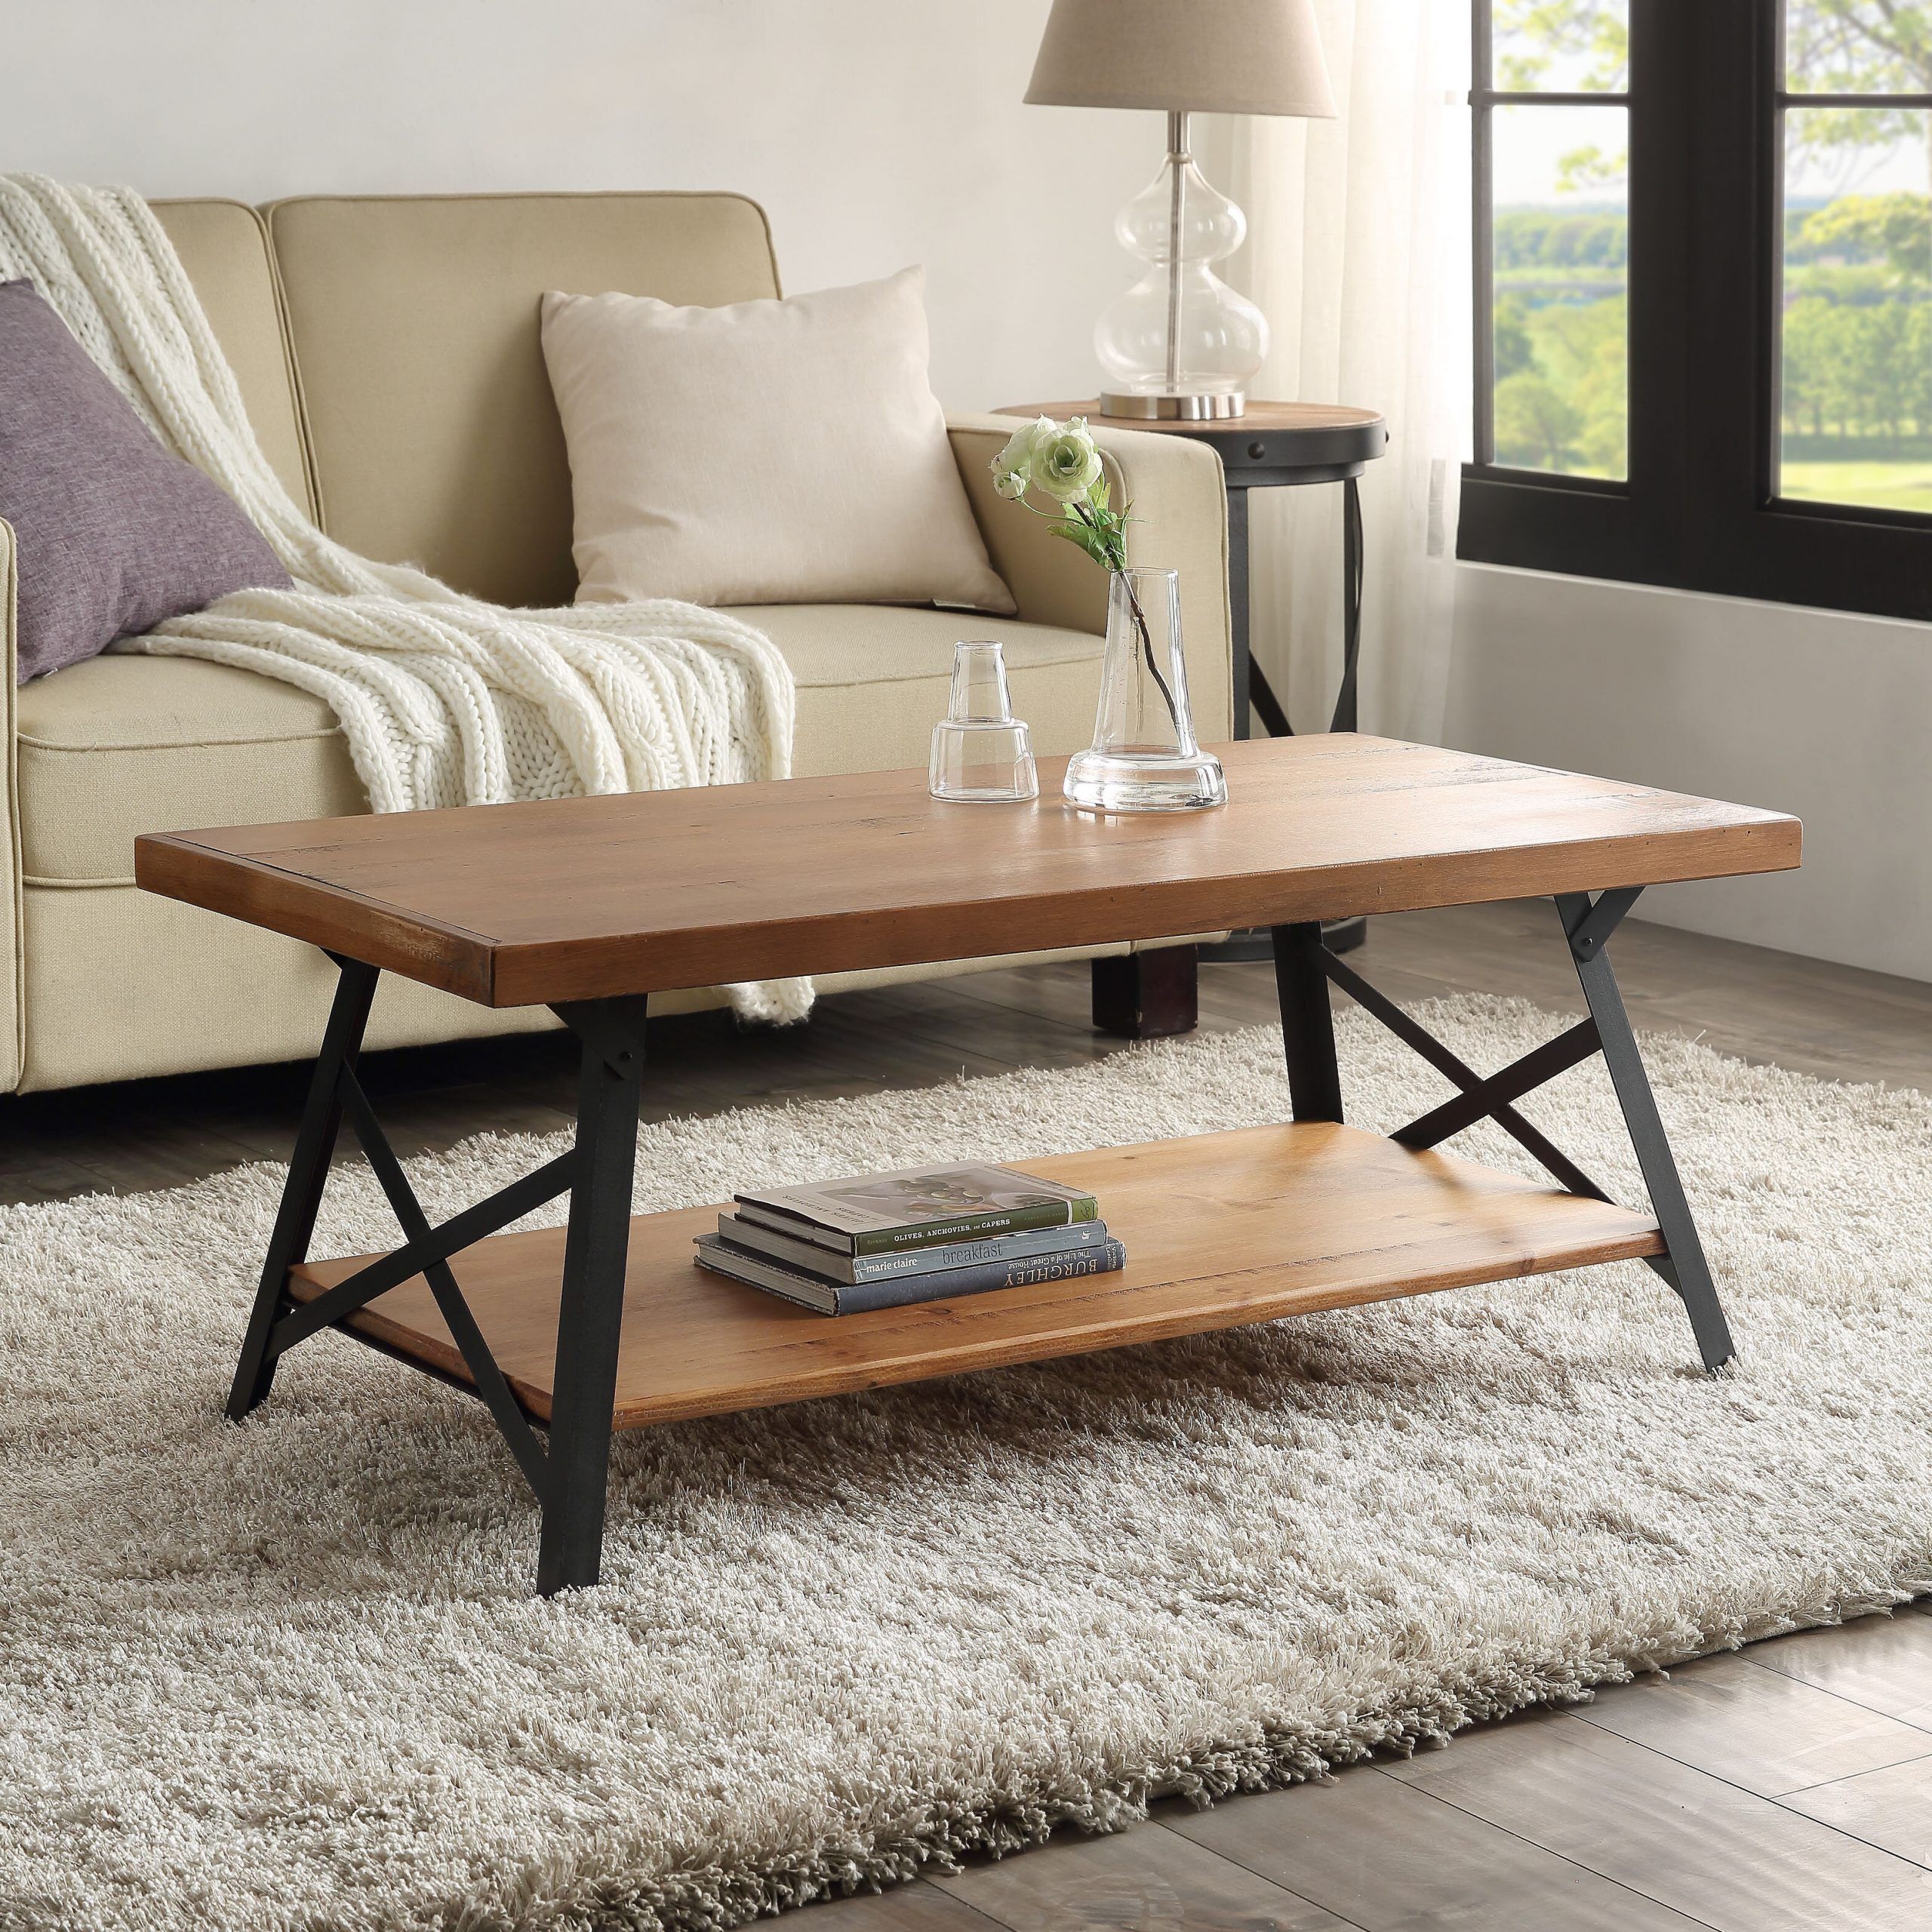 Gracie Oaks 43'' Metal Legs Rustic Coffee Table, Solid Wood Tabletop |  Wayfair With Iron Legs Coffee Tables (View 6 of 15)